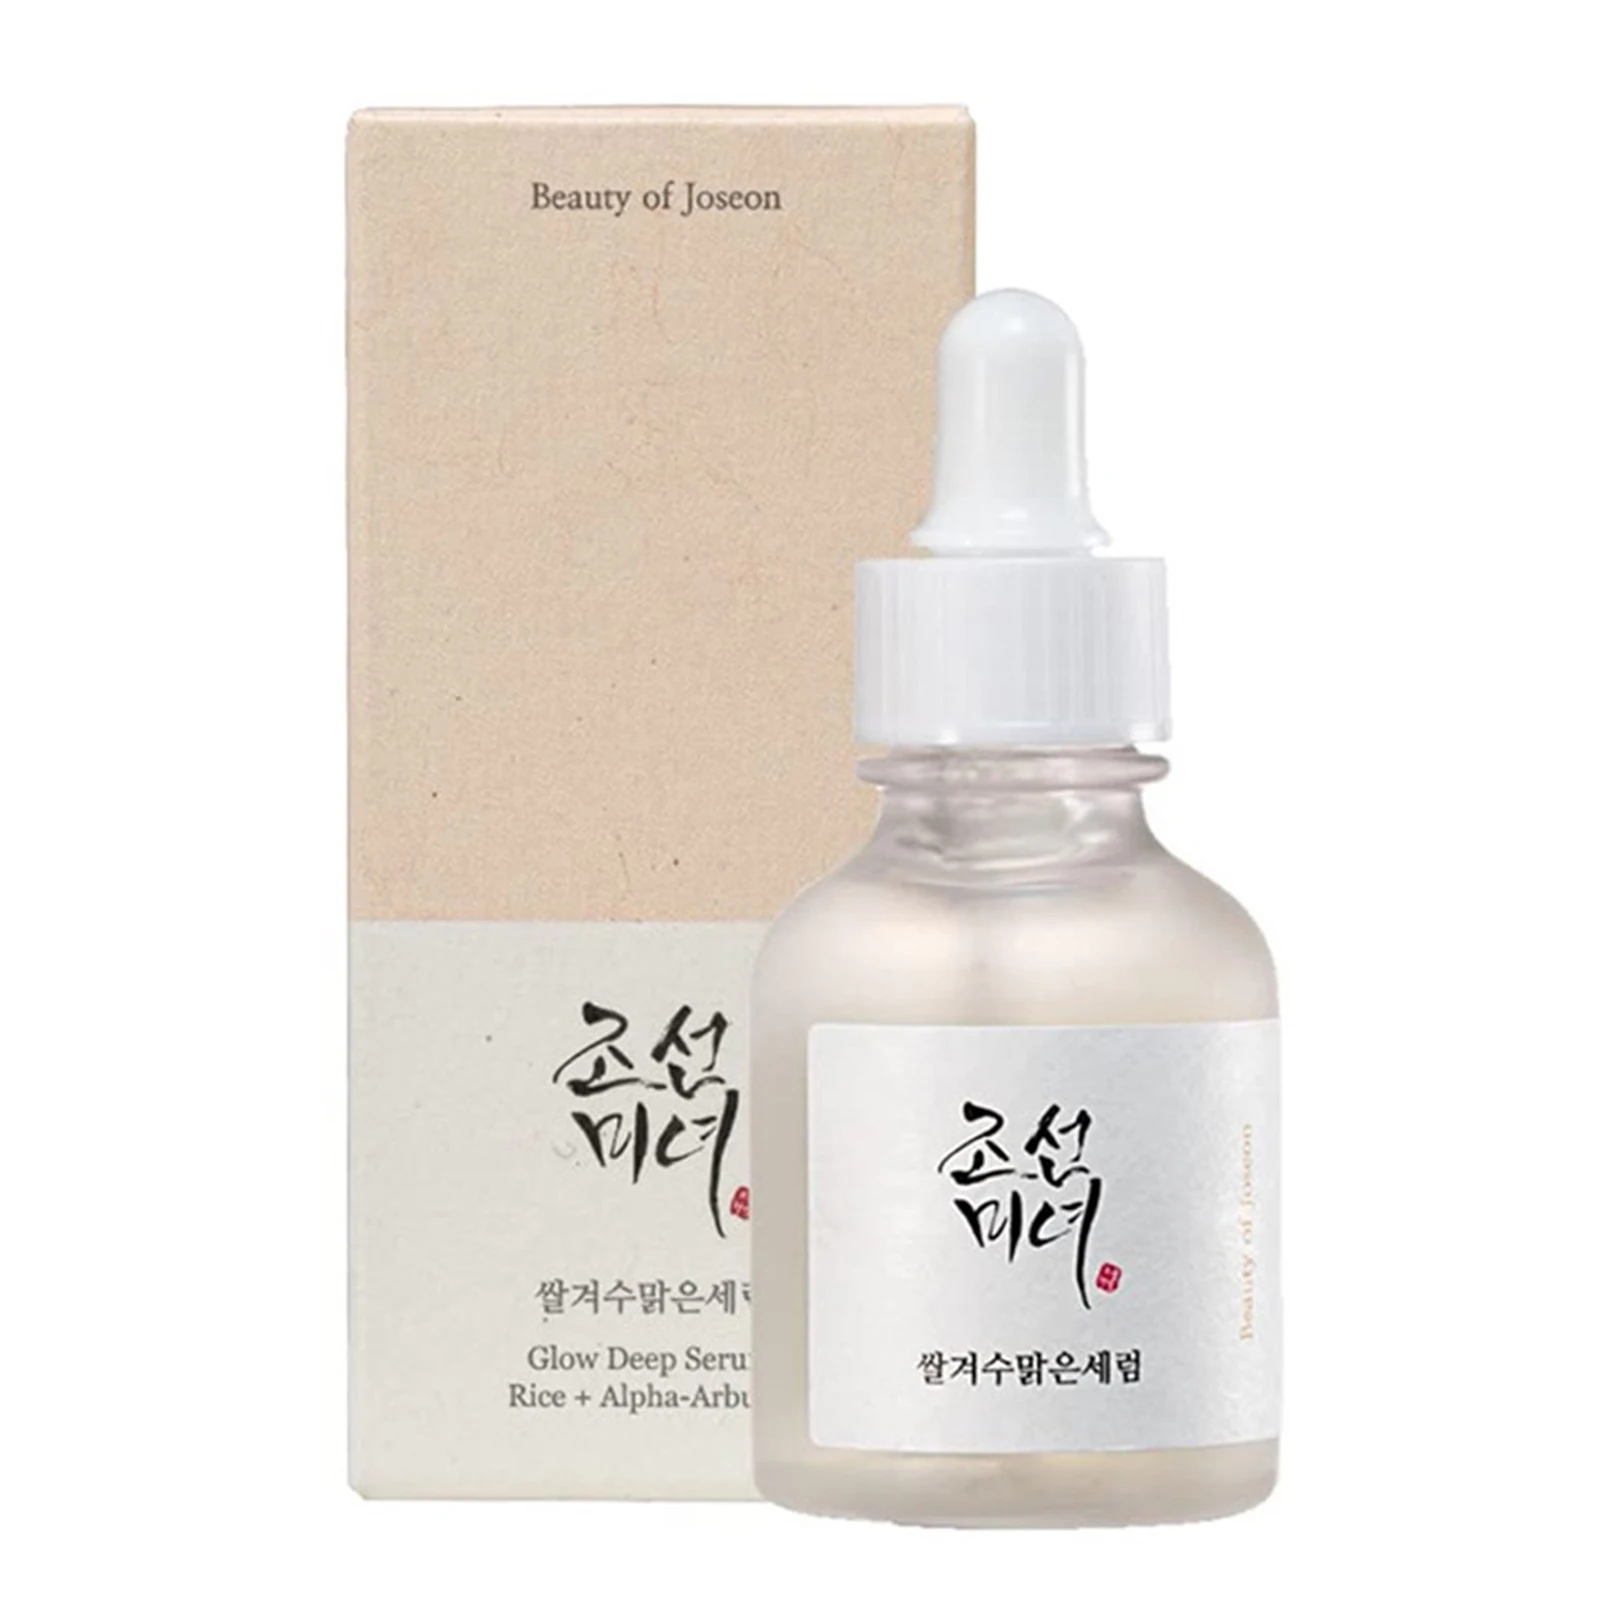 30ml Beauty of Joseon Serum Glow Deep Serum Propolis+Niacinamide images - 6